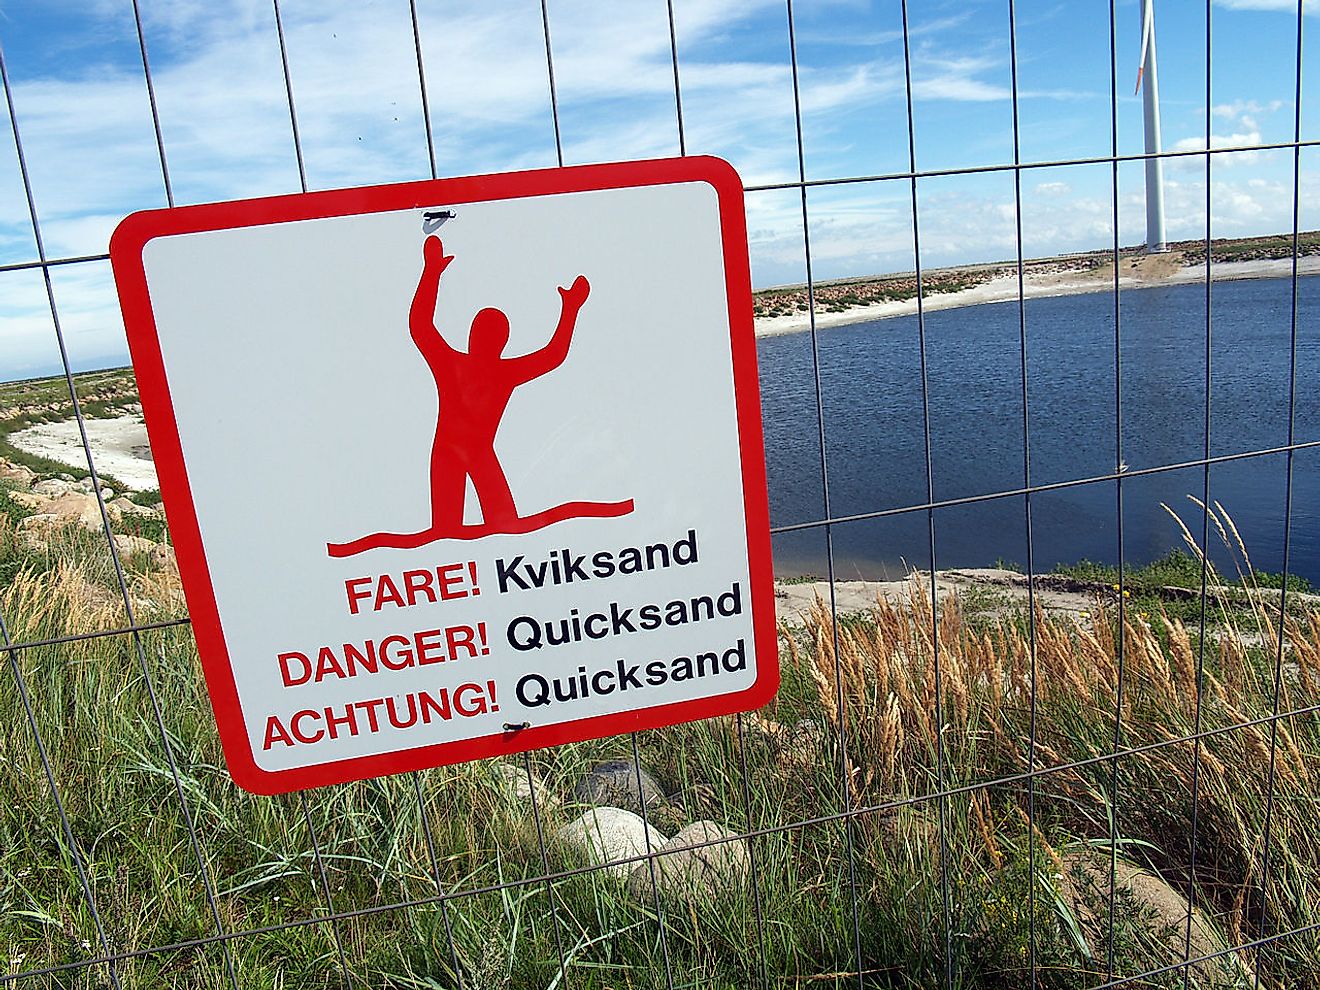 Warning sign for quicksand in Frederikshavn in Denmark. Image credit: Matthew Bargo/Wikimedia.org